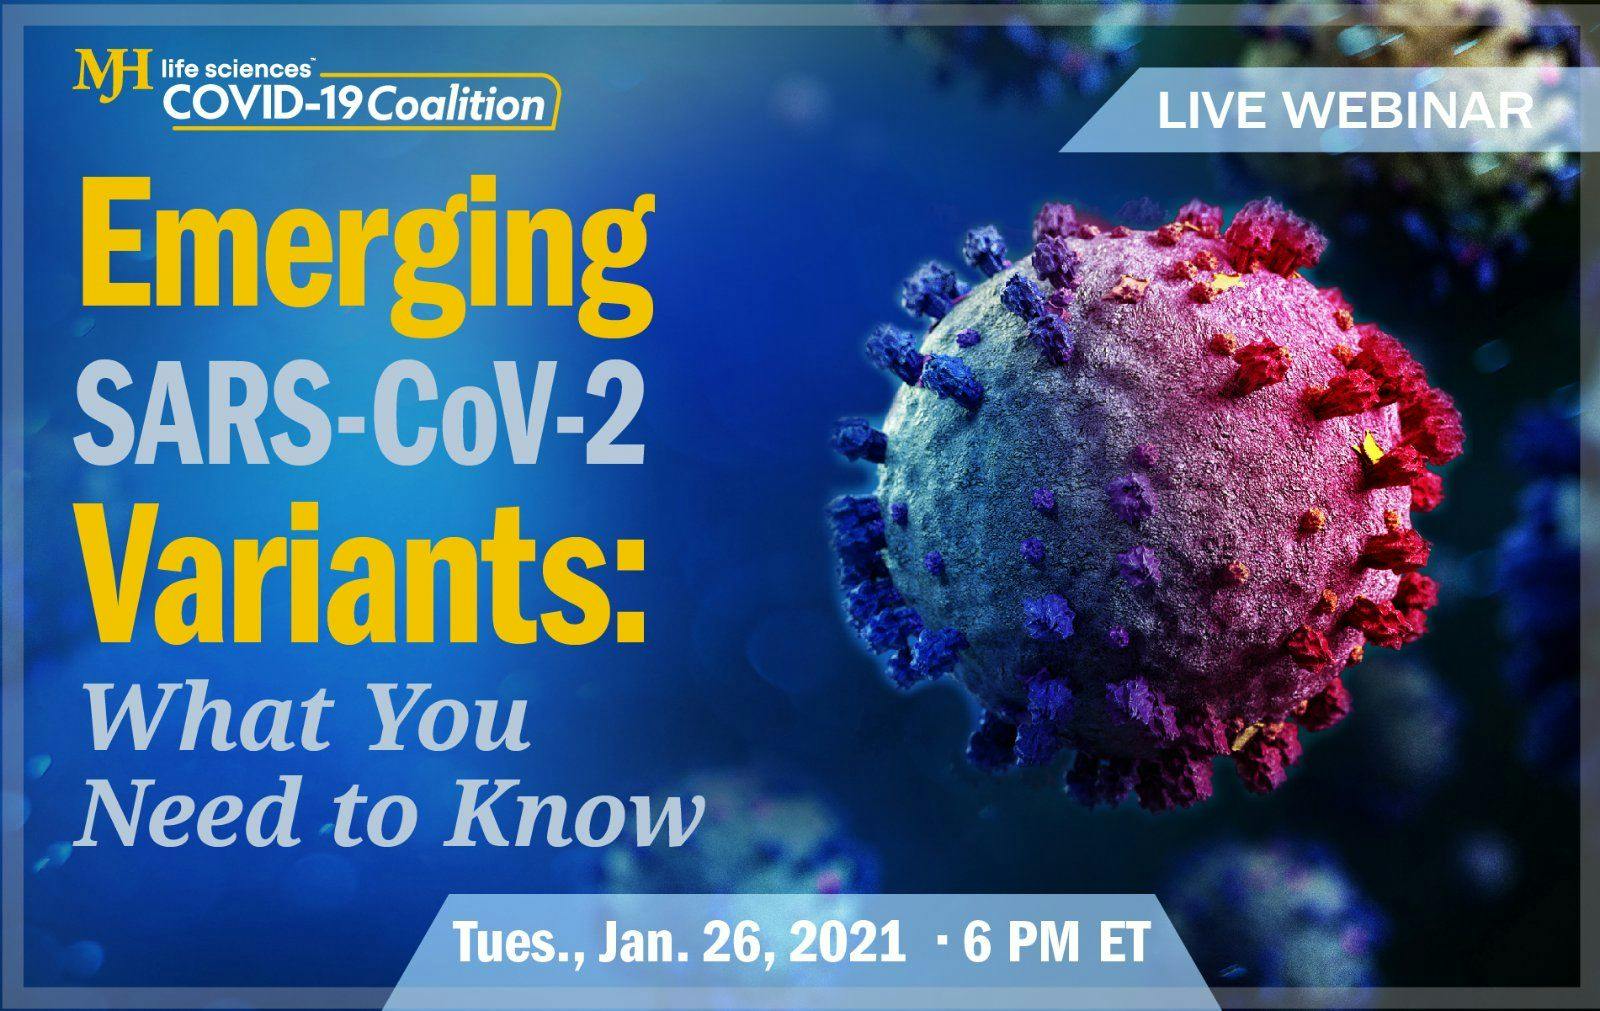 MJH Life Sciences COVID-19 Coalition webinar to discuss virus variants